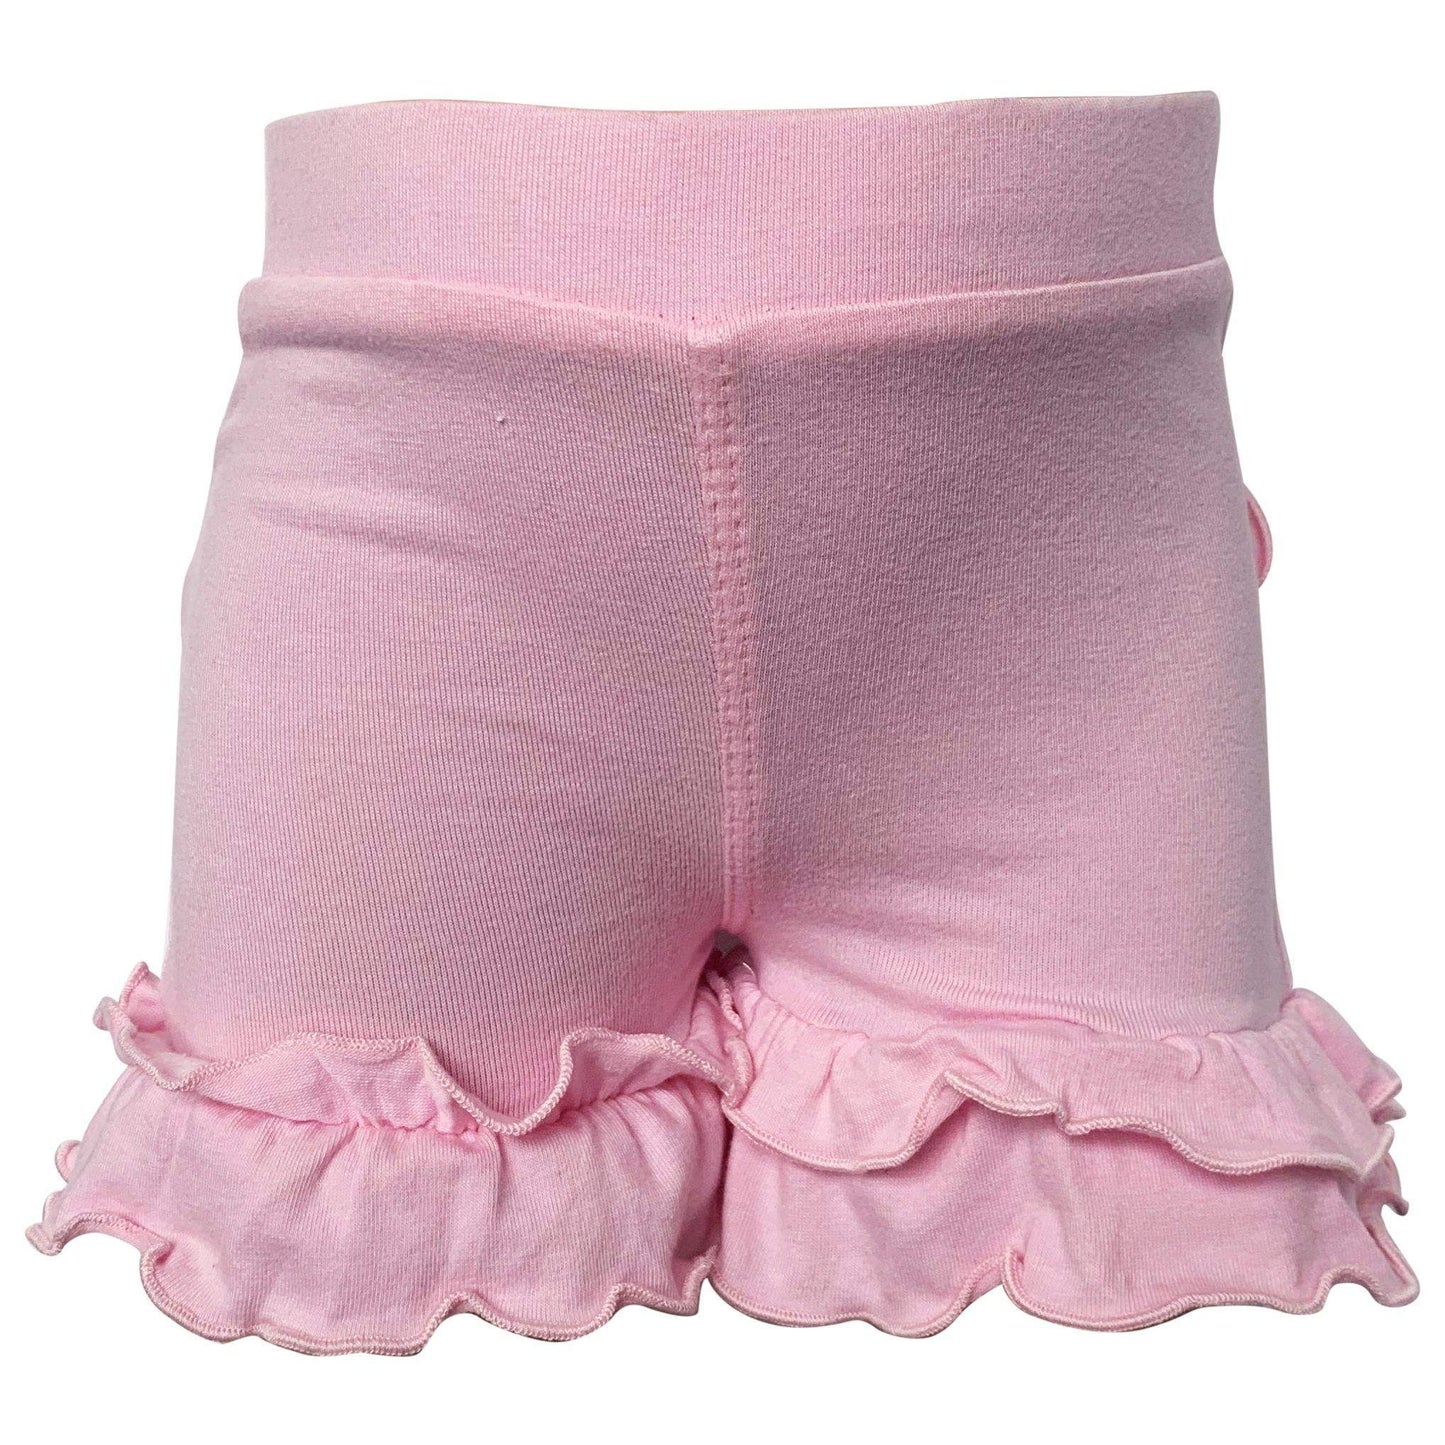 Pink Ruffle Butts Shorts Baby/Toddler (6mo-2-3T)-AnnLoren-12-24 Mo,2-3T,6-12 Mo,ANNLOREN,Pink,Shorts,Spring & Summer,Spring & Summer 2021